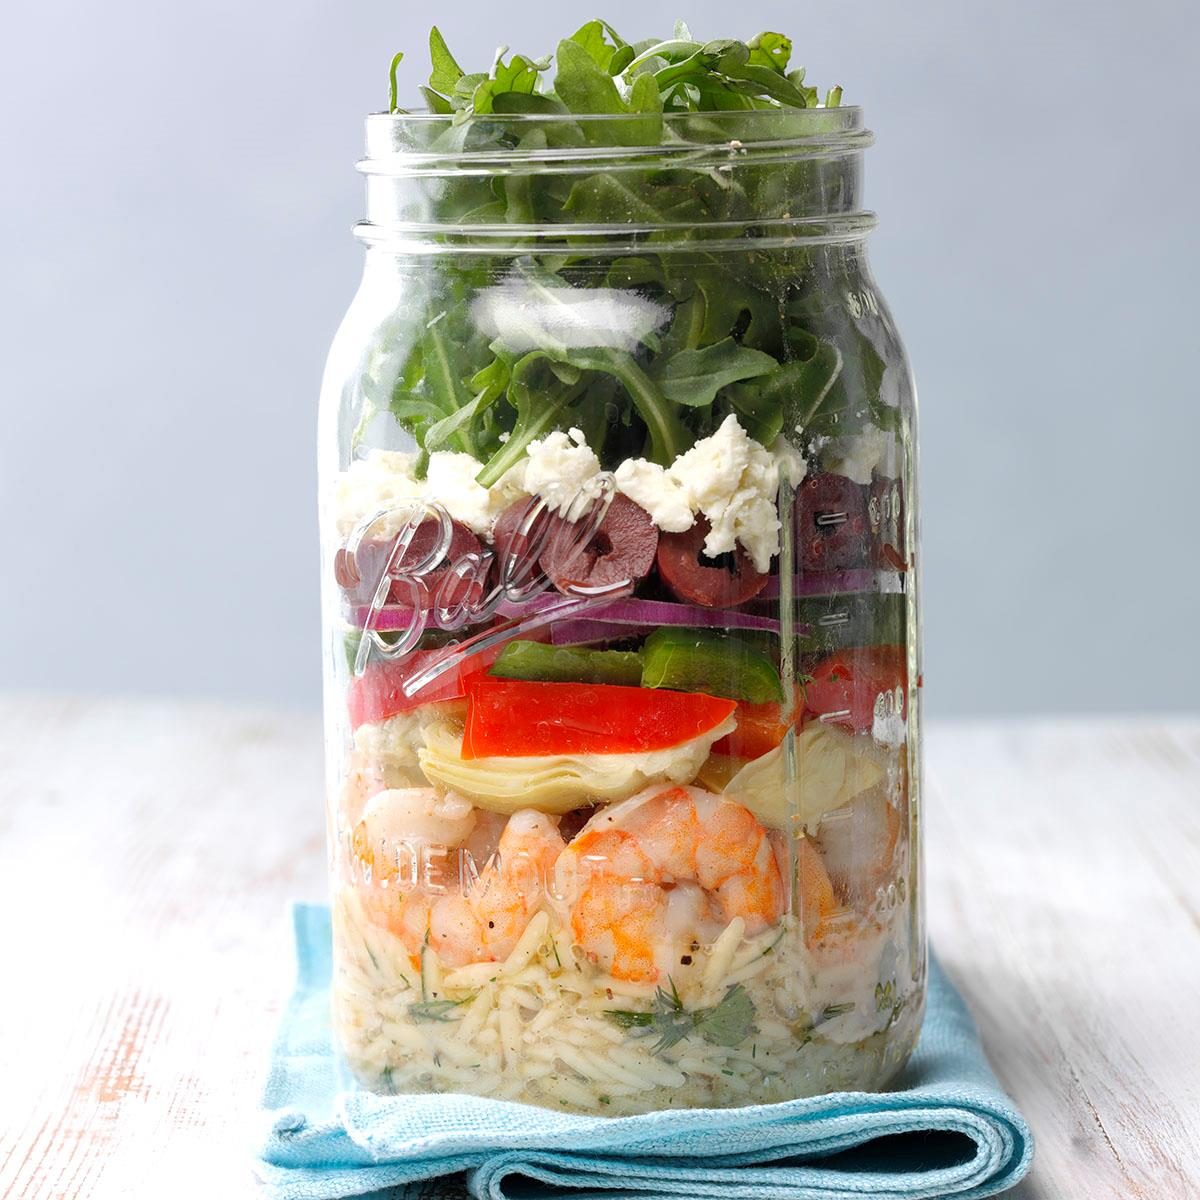 https://www.tasteofhome.com/wp-content/uploads/2018/05/Mediterranean-Shrimp-Salad-in-a-Jar_EXPS_MTCBBZ18_224337_D02_28__1b-3.jpg